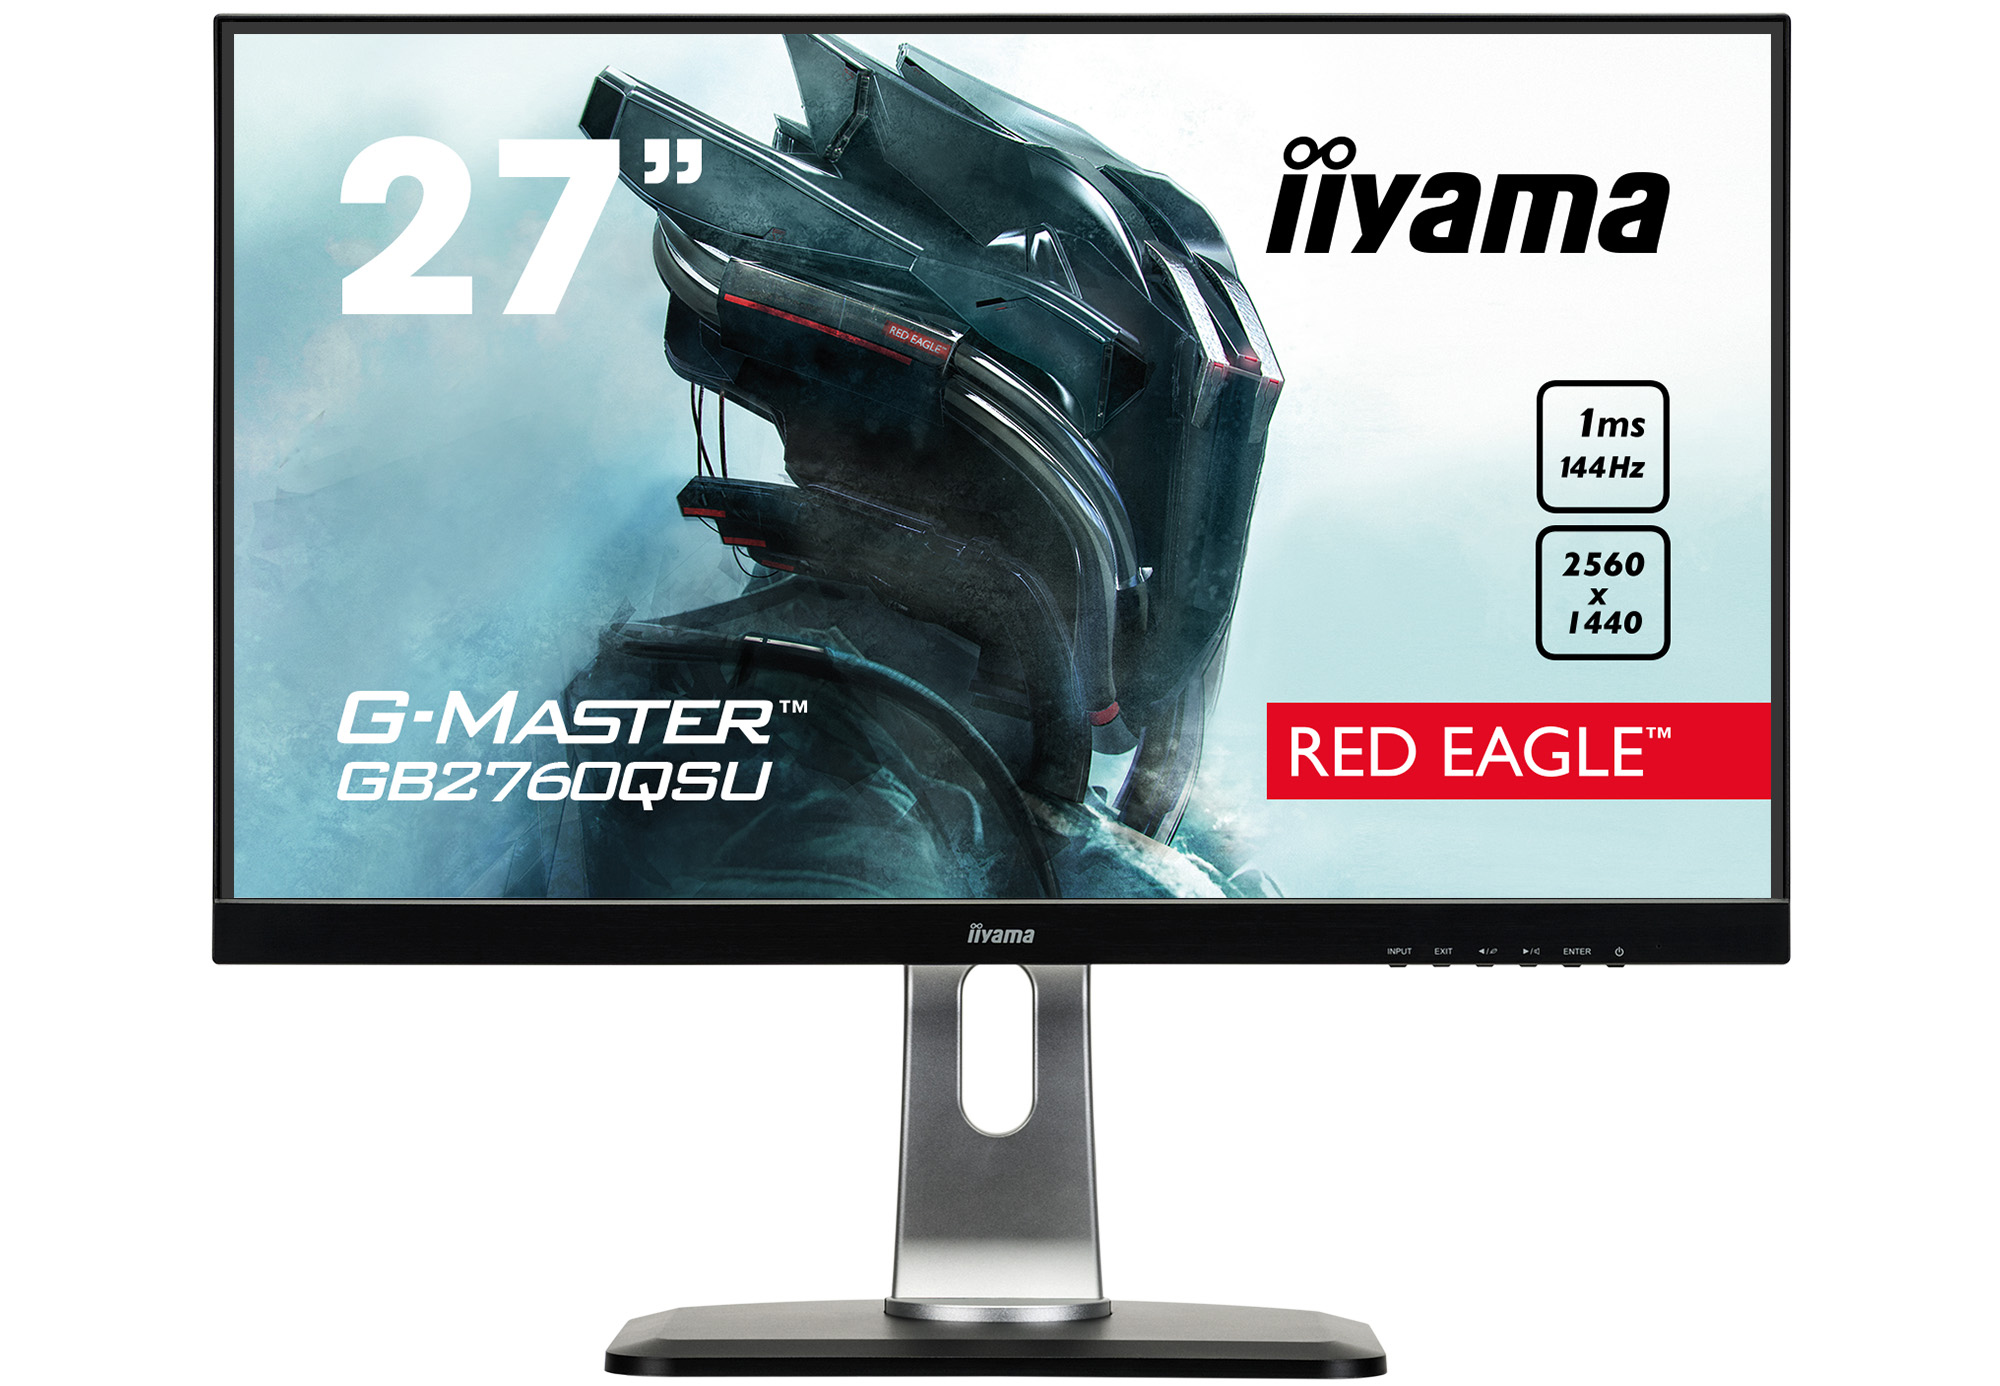 Iiyama Launches G-Master GB2760QSU Display: WQHD at 144 Hz